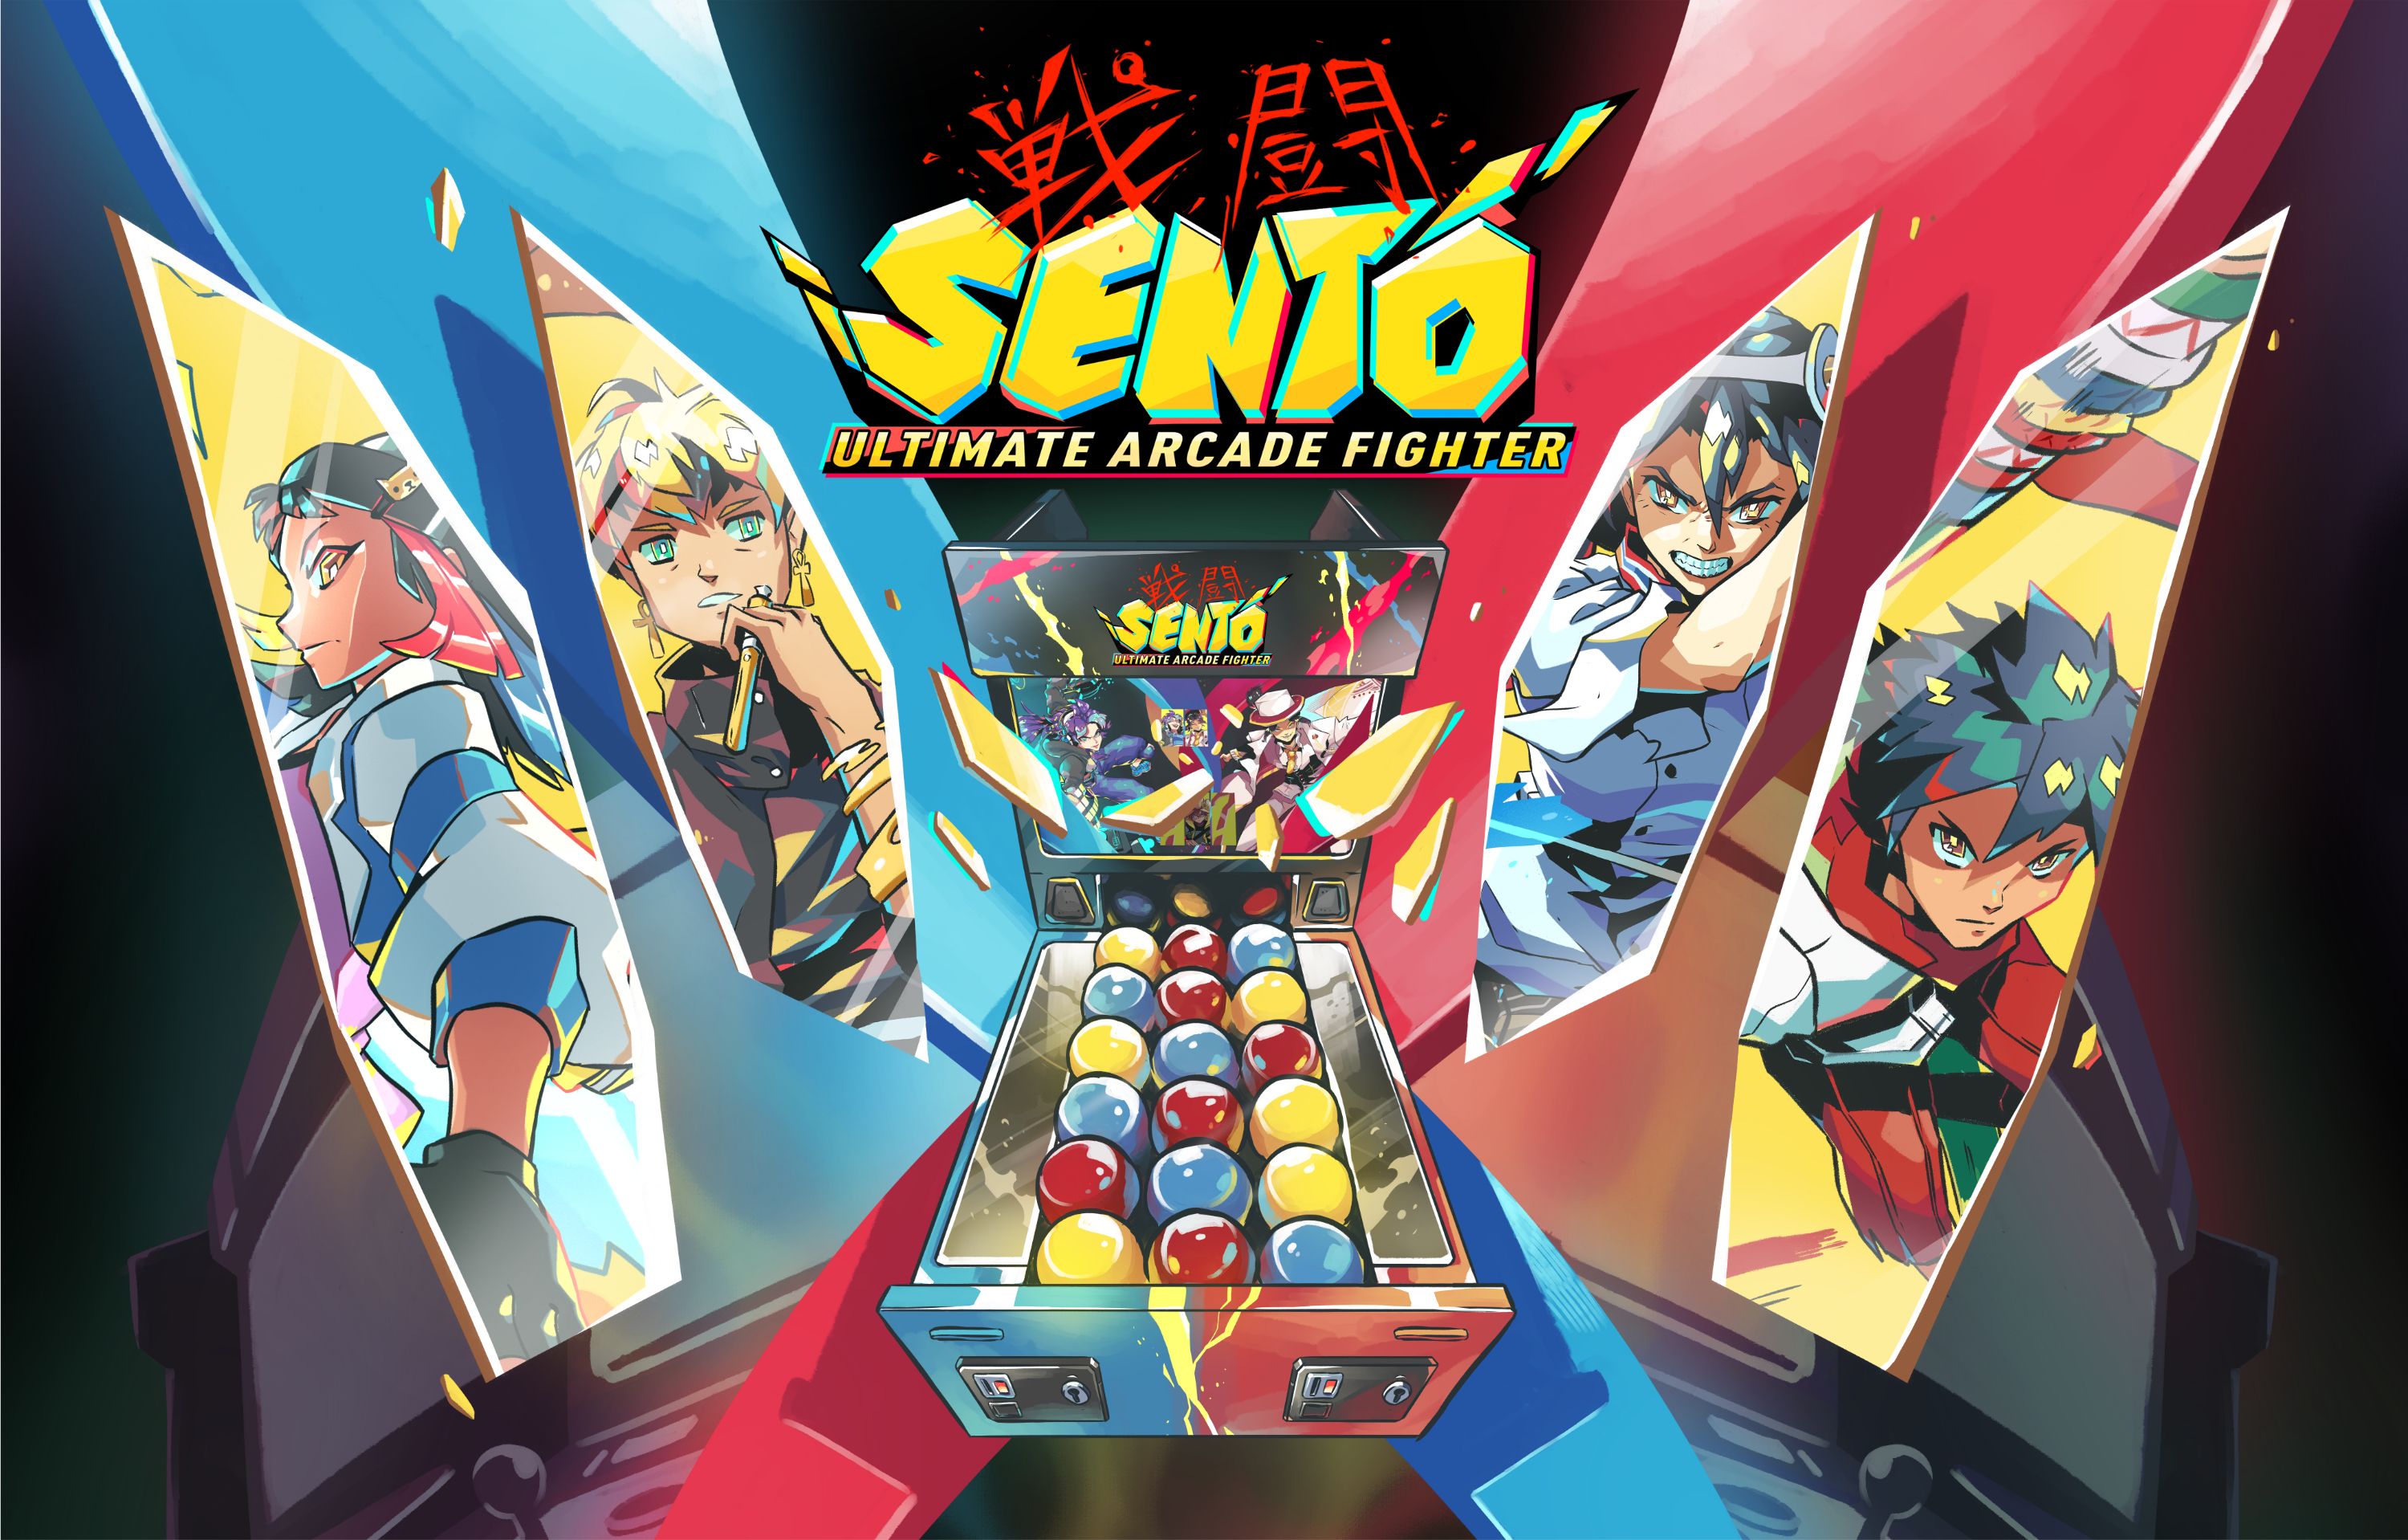 SENTO: Ultimate Arcade Fighter